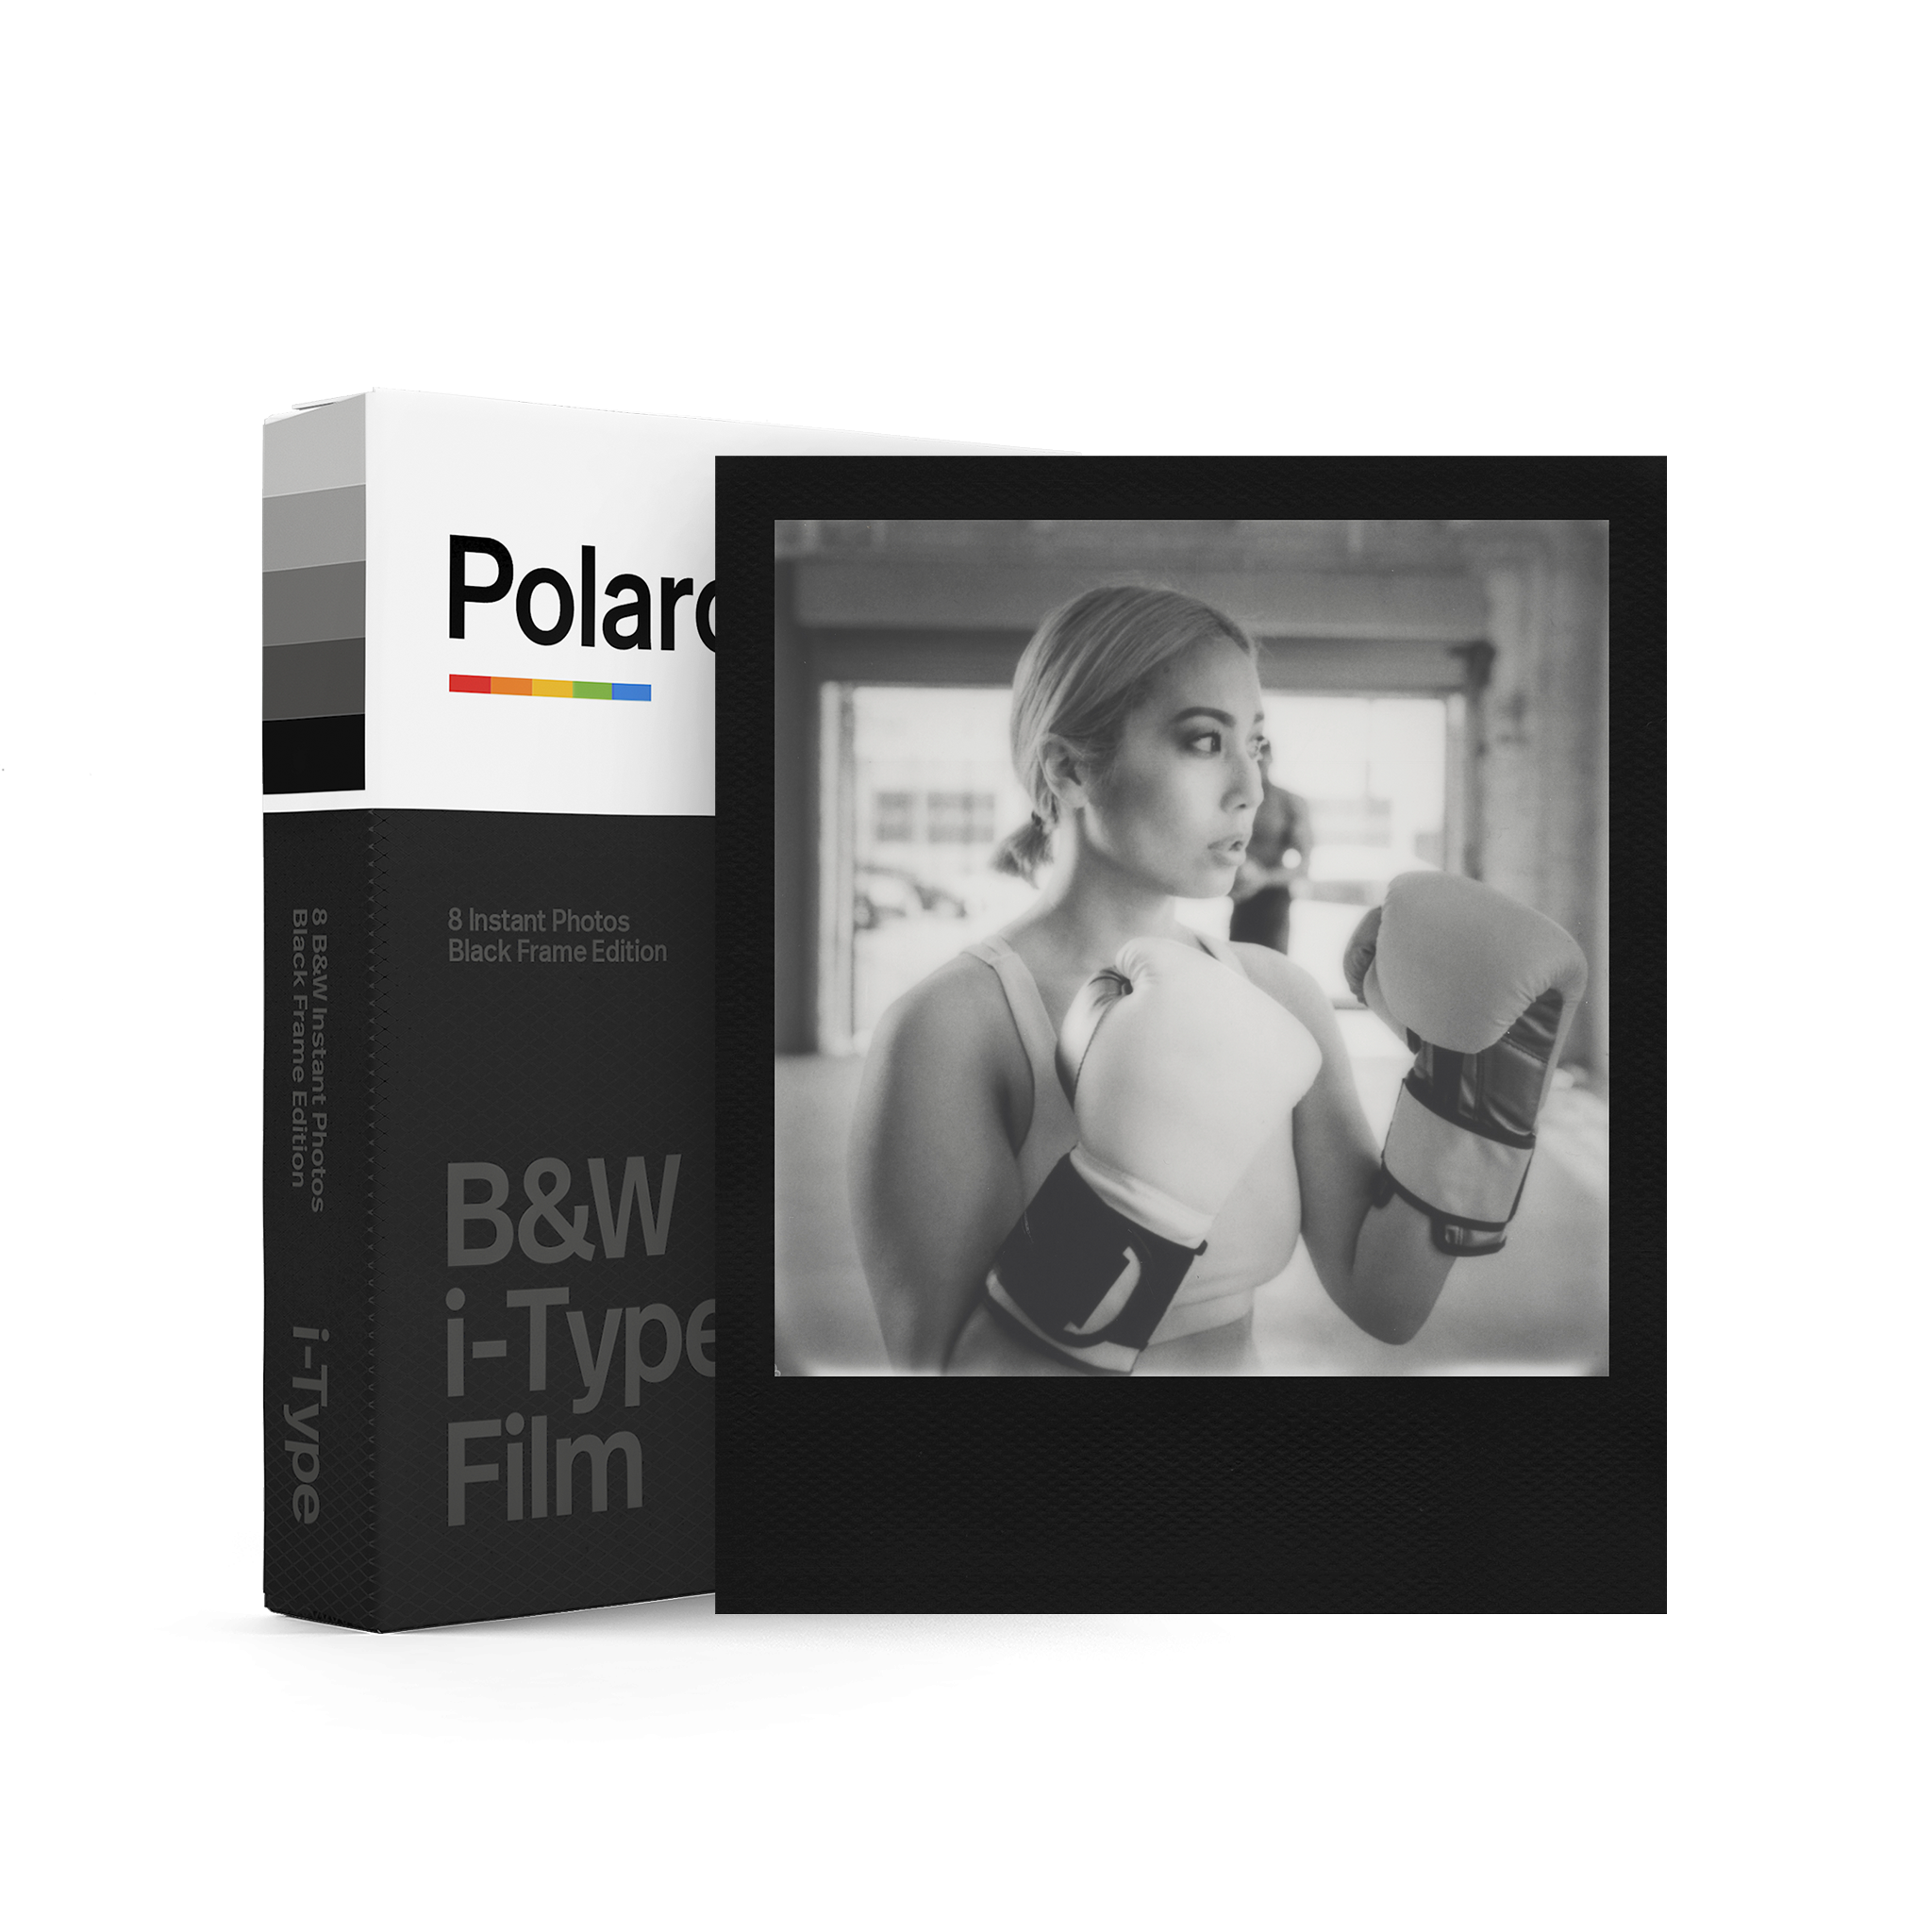 Polaroid Black & White Film for i-Type New-In-Box at Roberts Camera